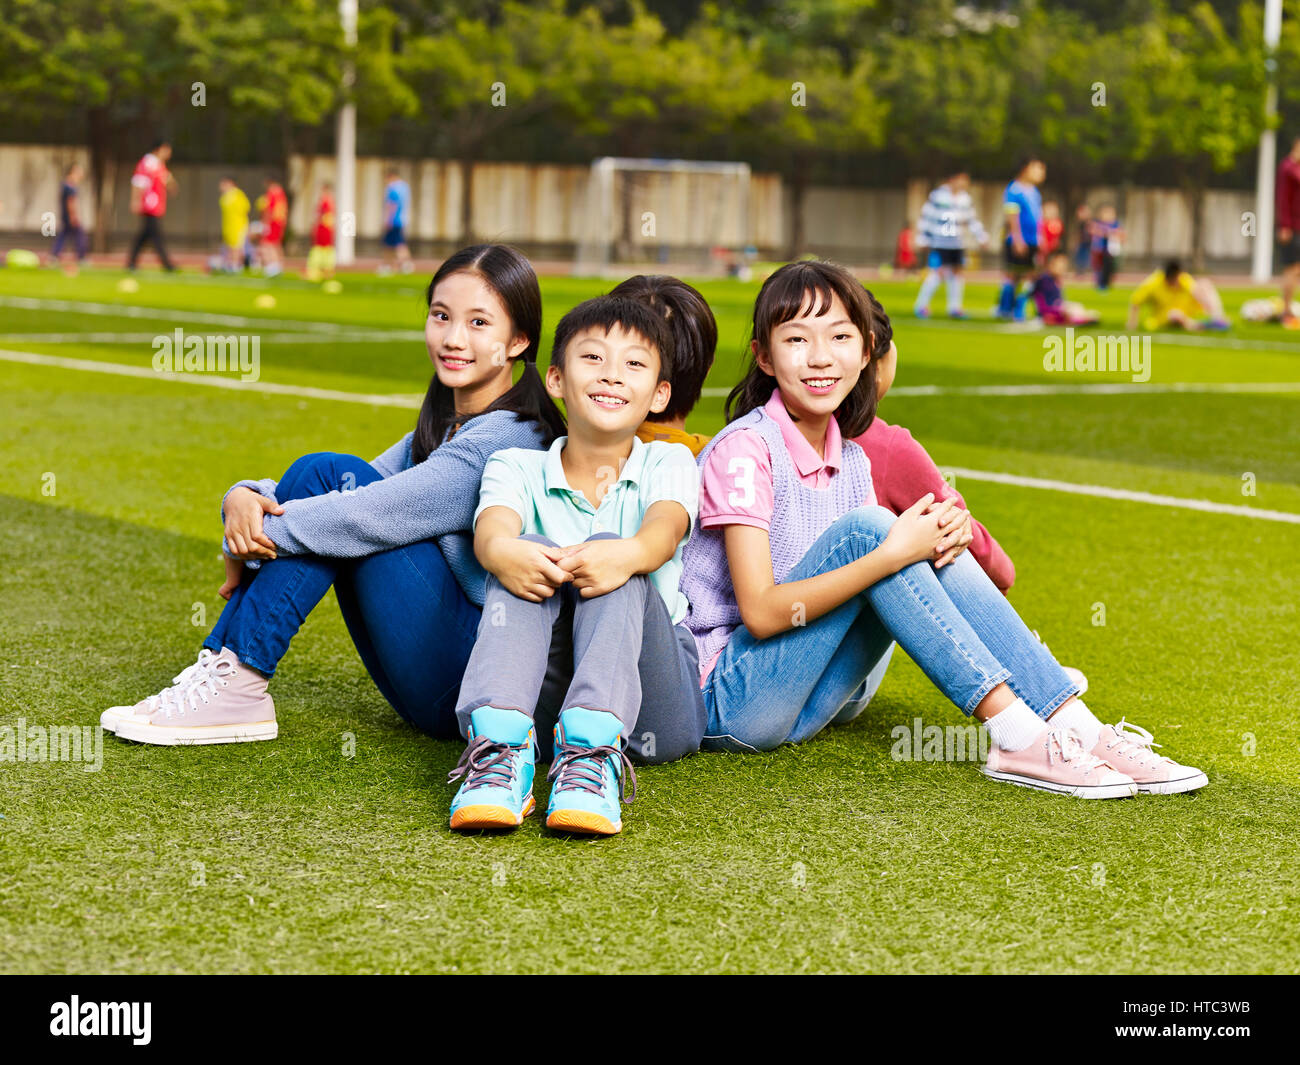 Groupe d'happy smiling elementary school boys and girls sitting on grass de jeux pour enfants. Banque D'Images